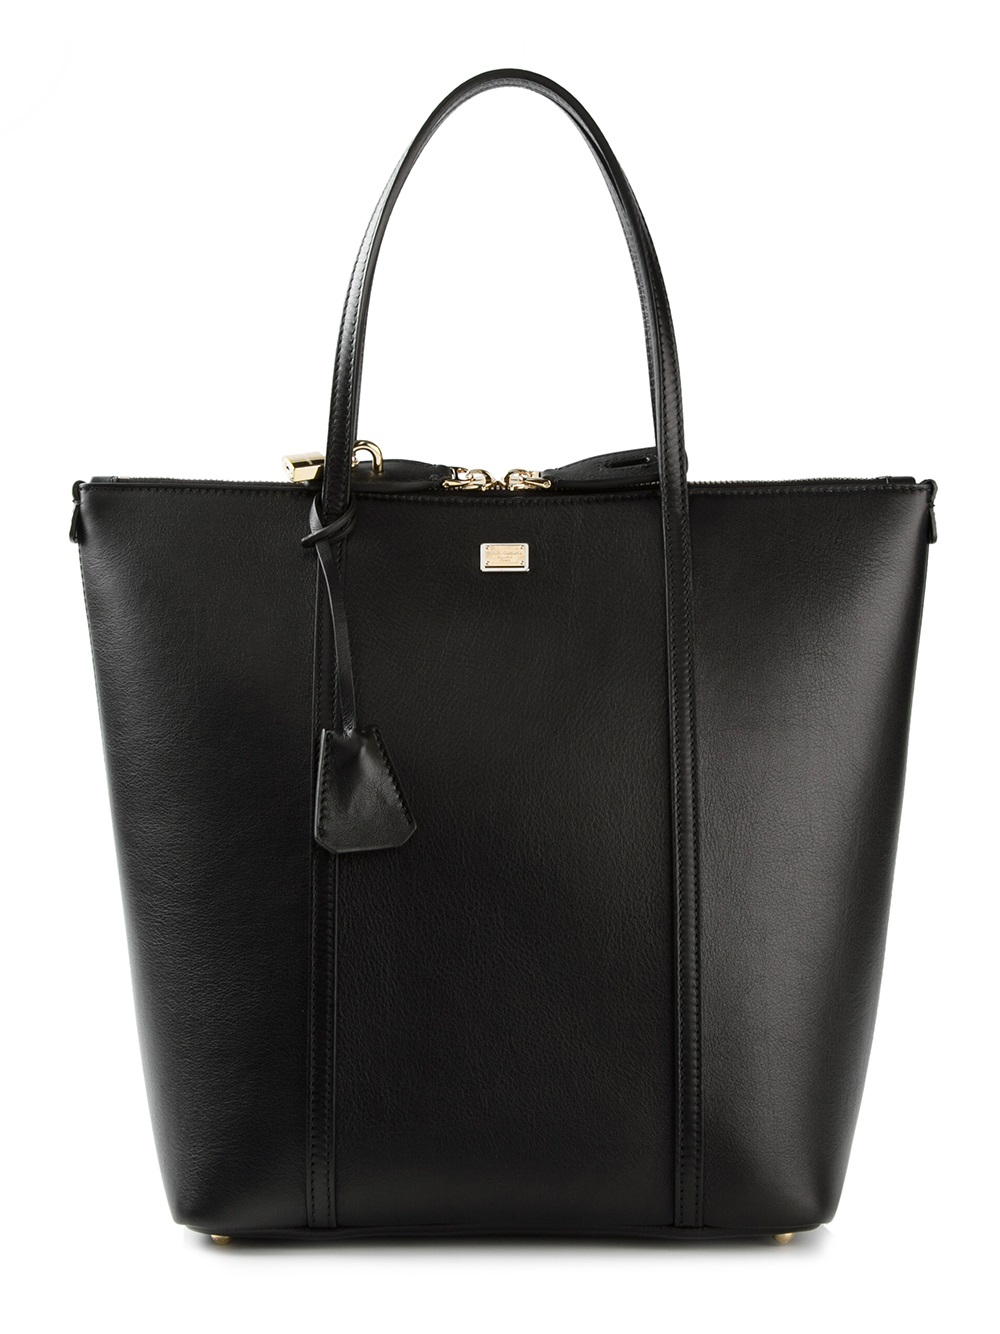 Dolce & Gabbana Shopping Bag in Black | Lyst